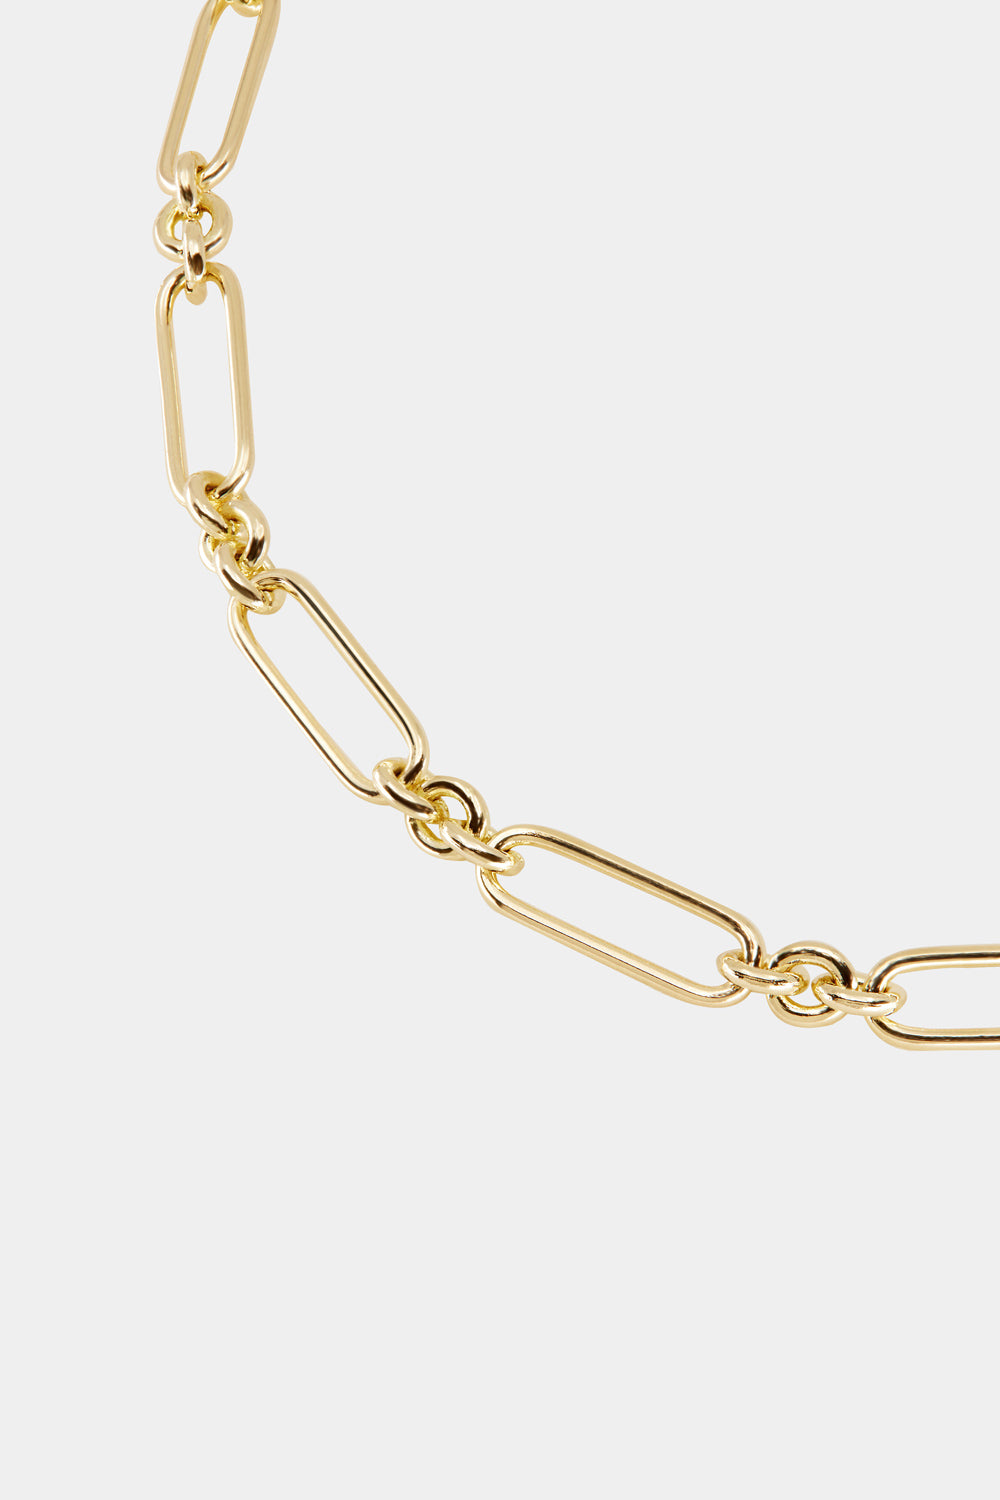 Mini Lennox Necklace | 9K Yellow or Rose Gold, More Options Available| Natasha Schweitzer